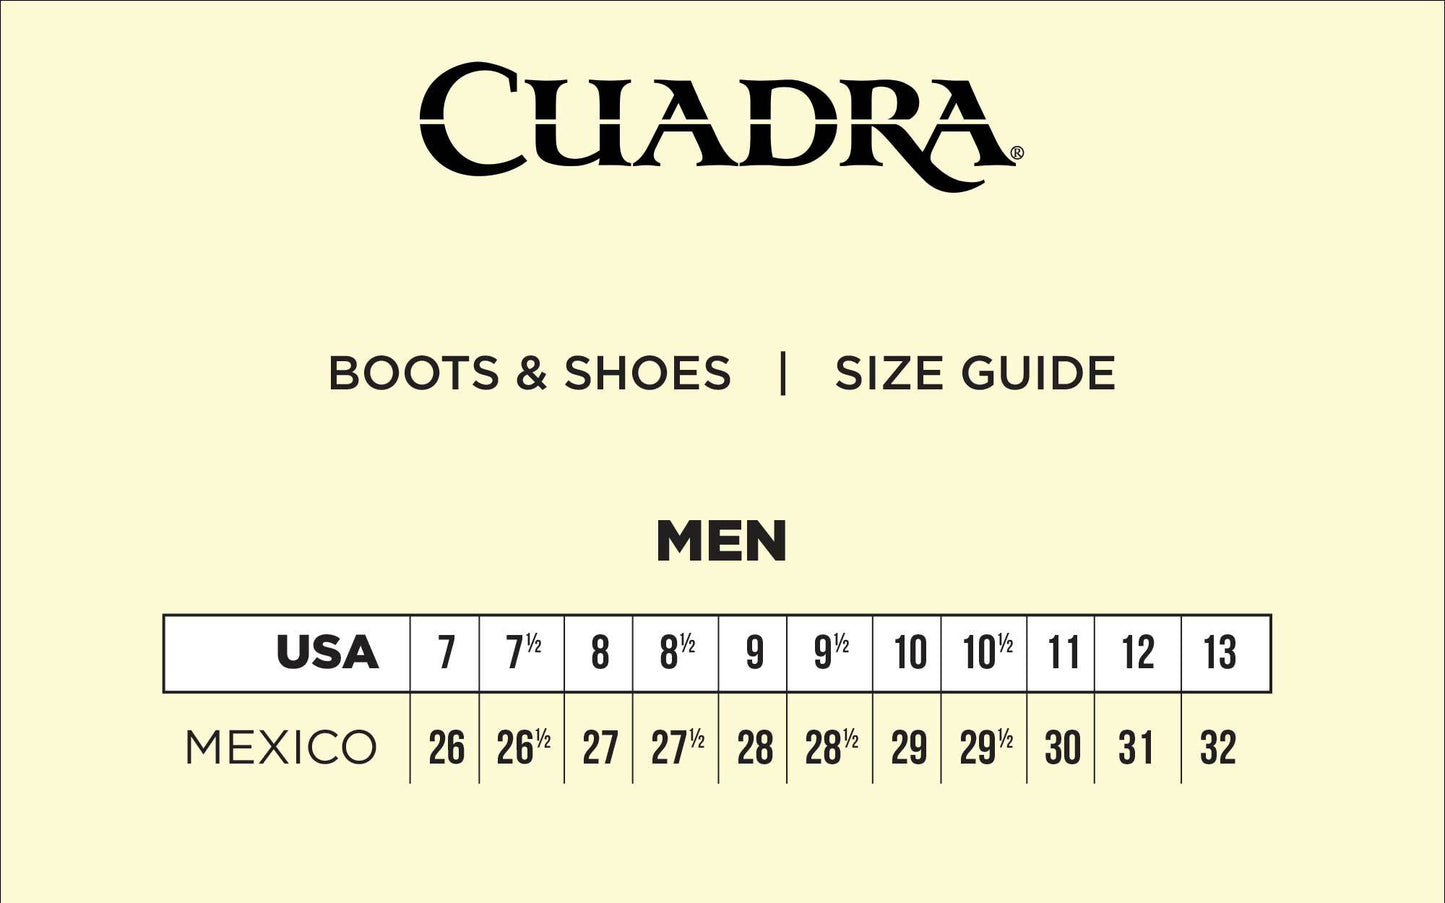 Cuadra's men's boots size guide. 